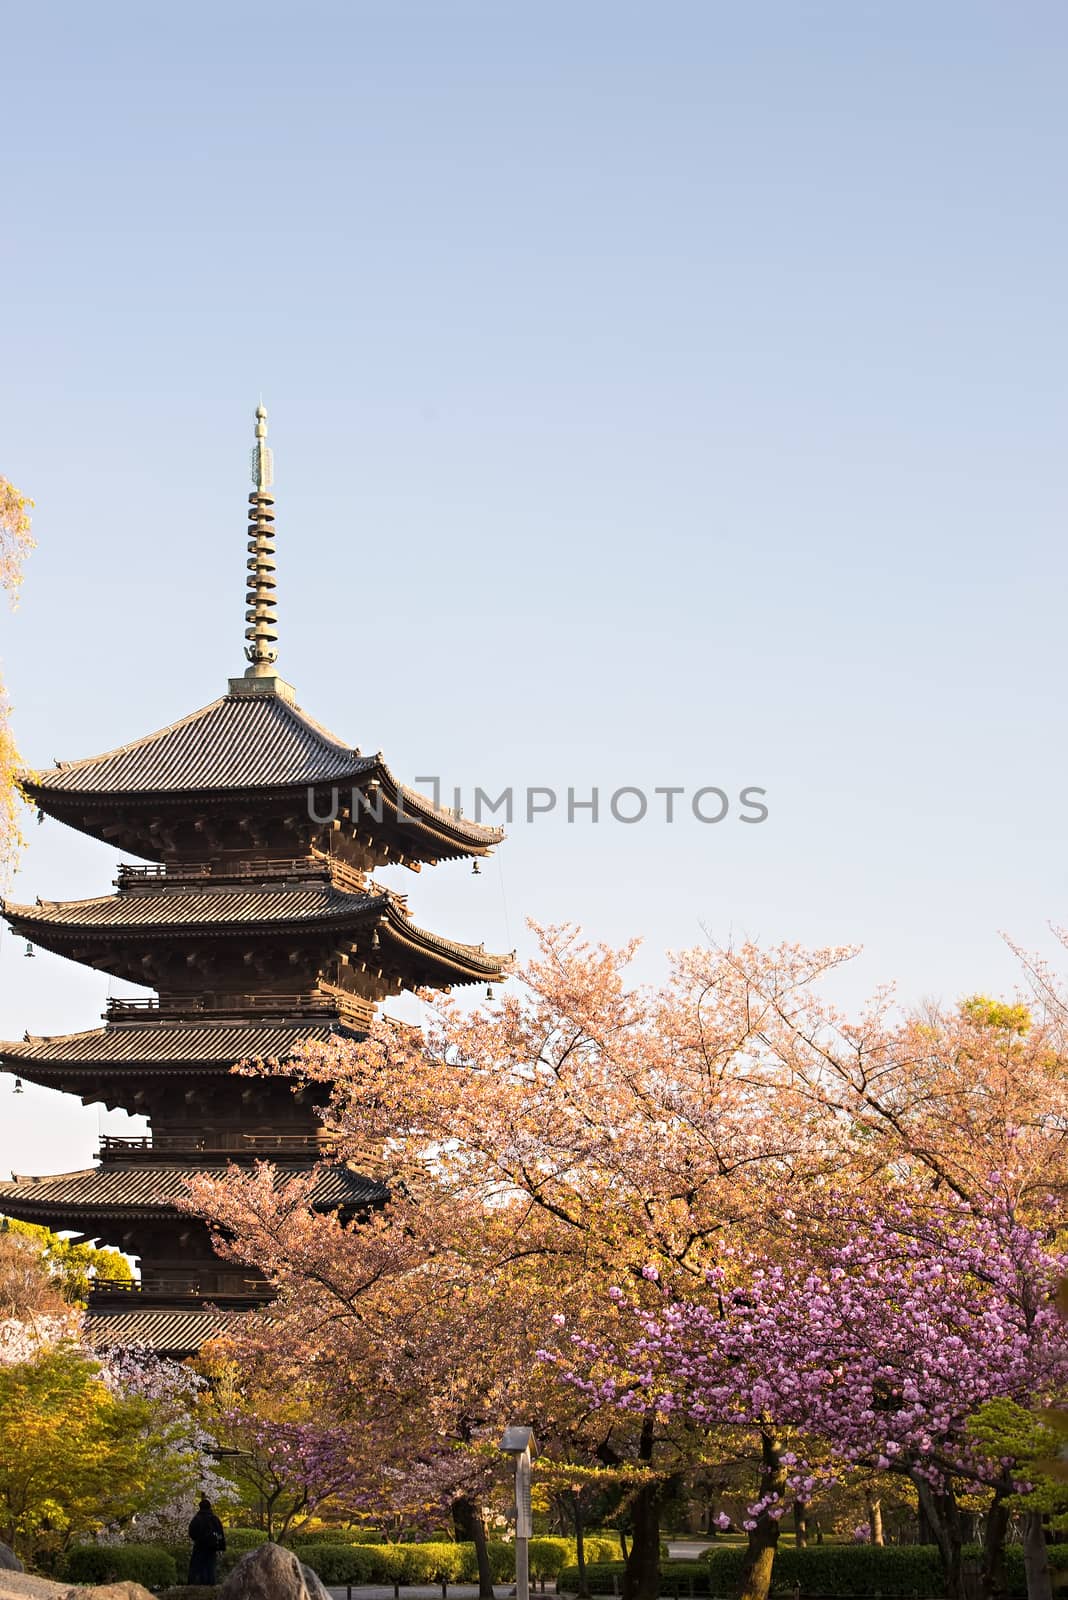 Kyoto, Japan at Toji temple in summer by Yuri2012